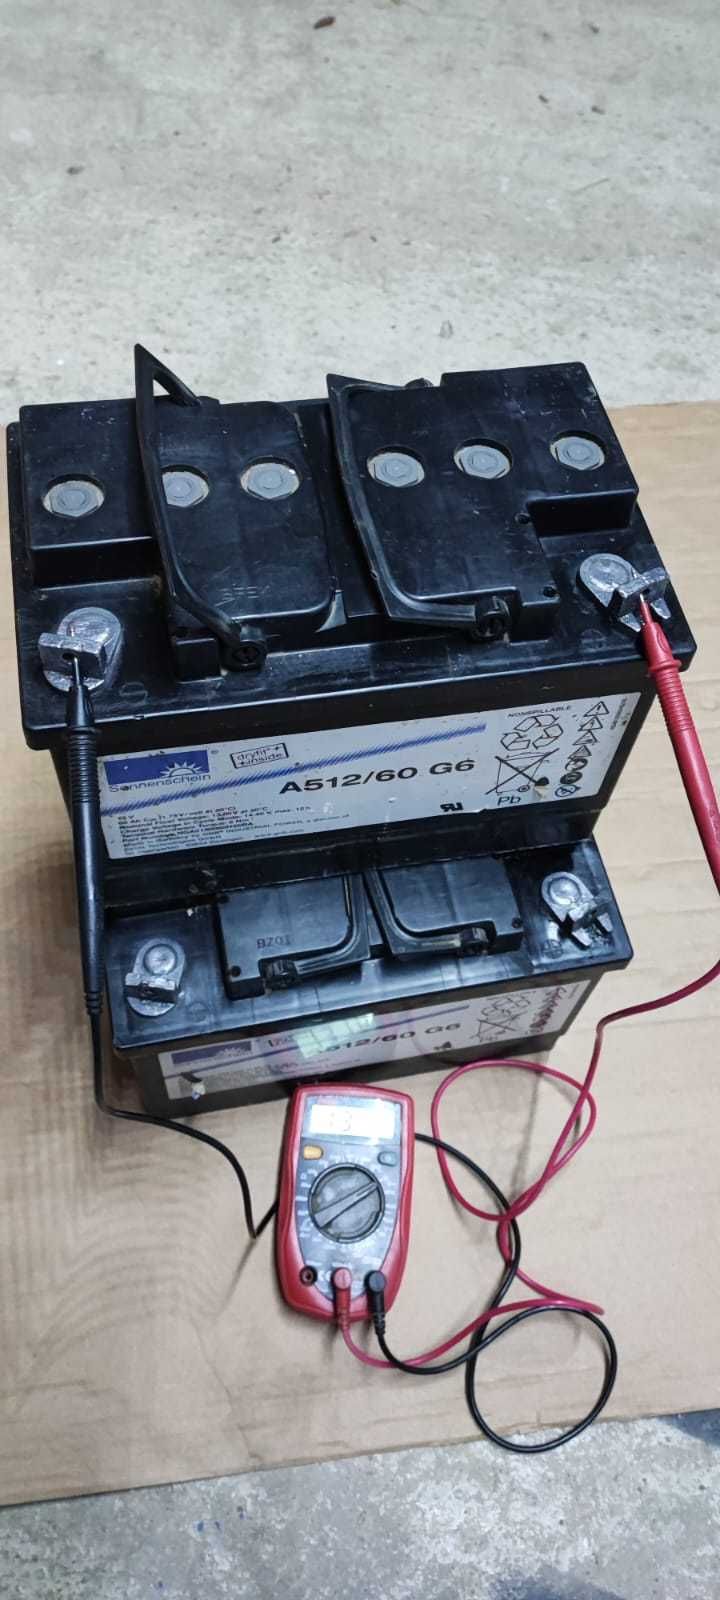 Acumulator, batere gel, A512/60, G6, import Germania, 2 buc